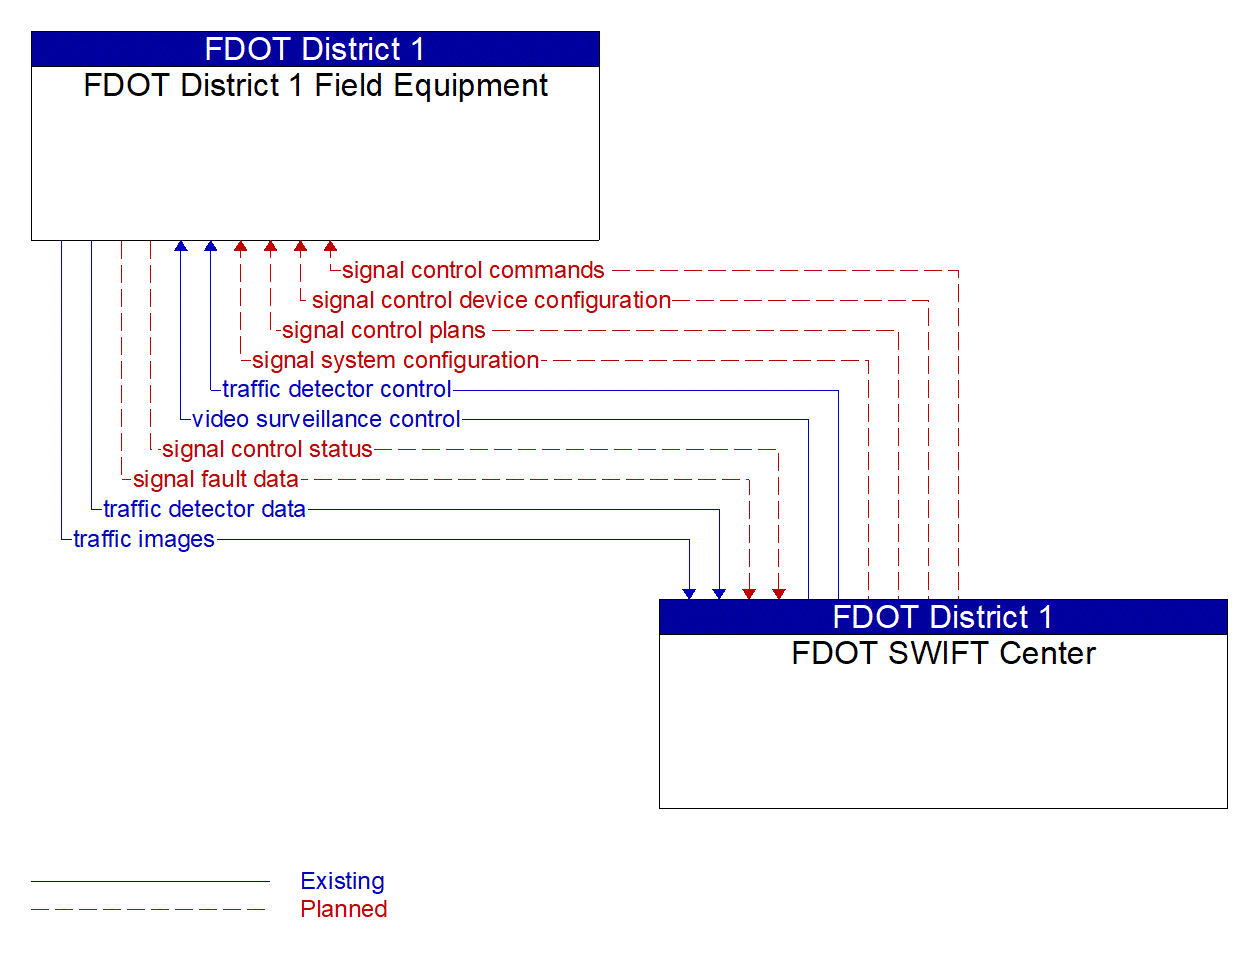 Service Graphic: Traffic Signal Control (FDOT District 1)